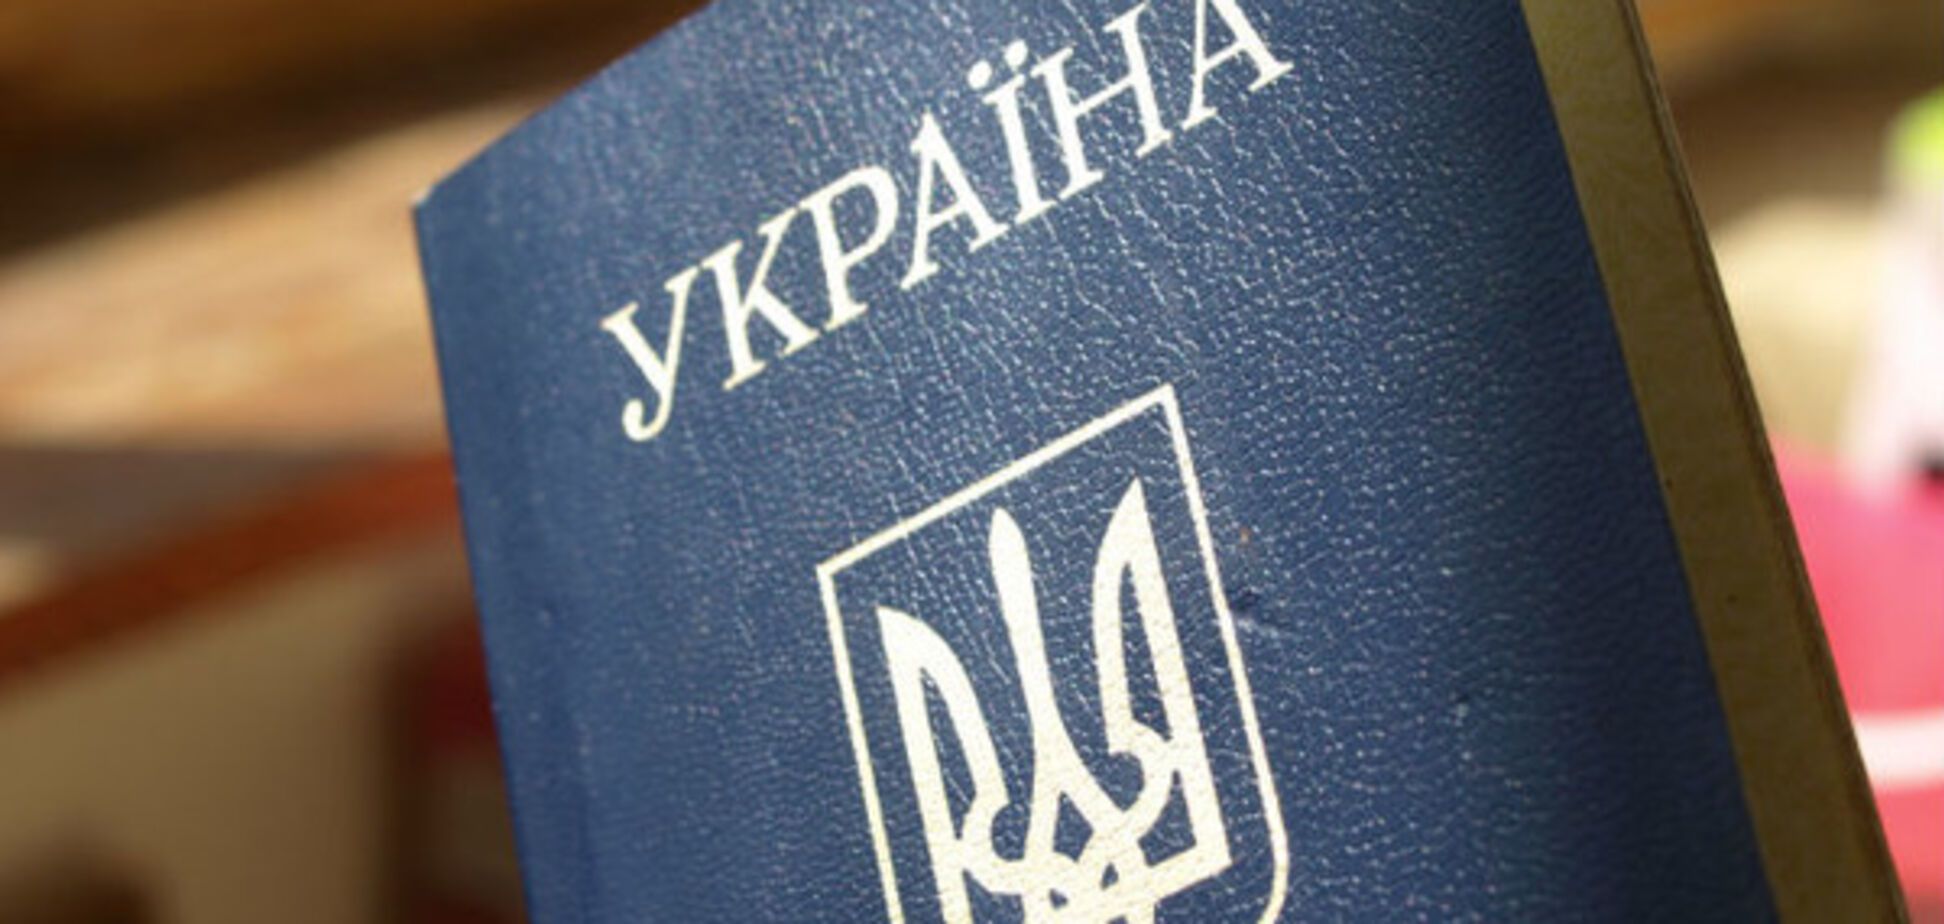 паспорт України